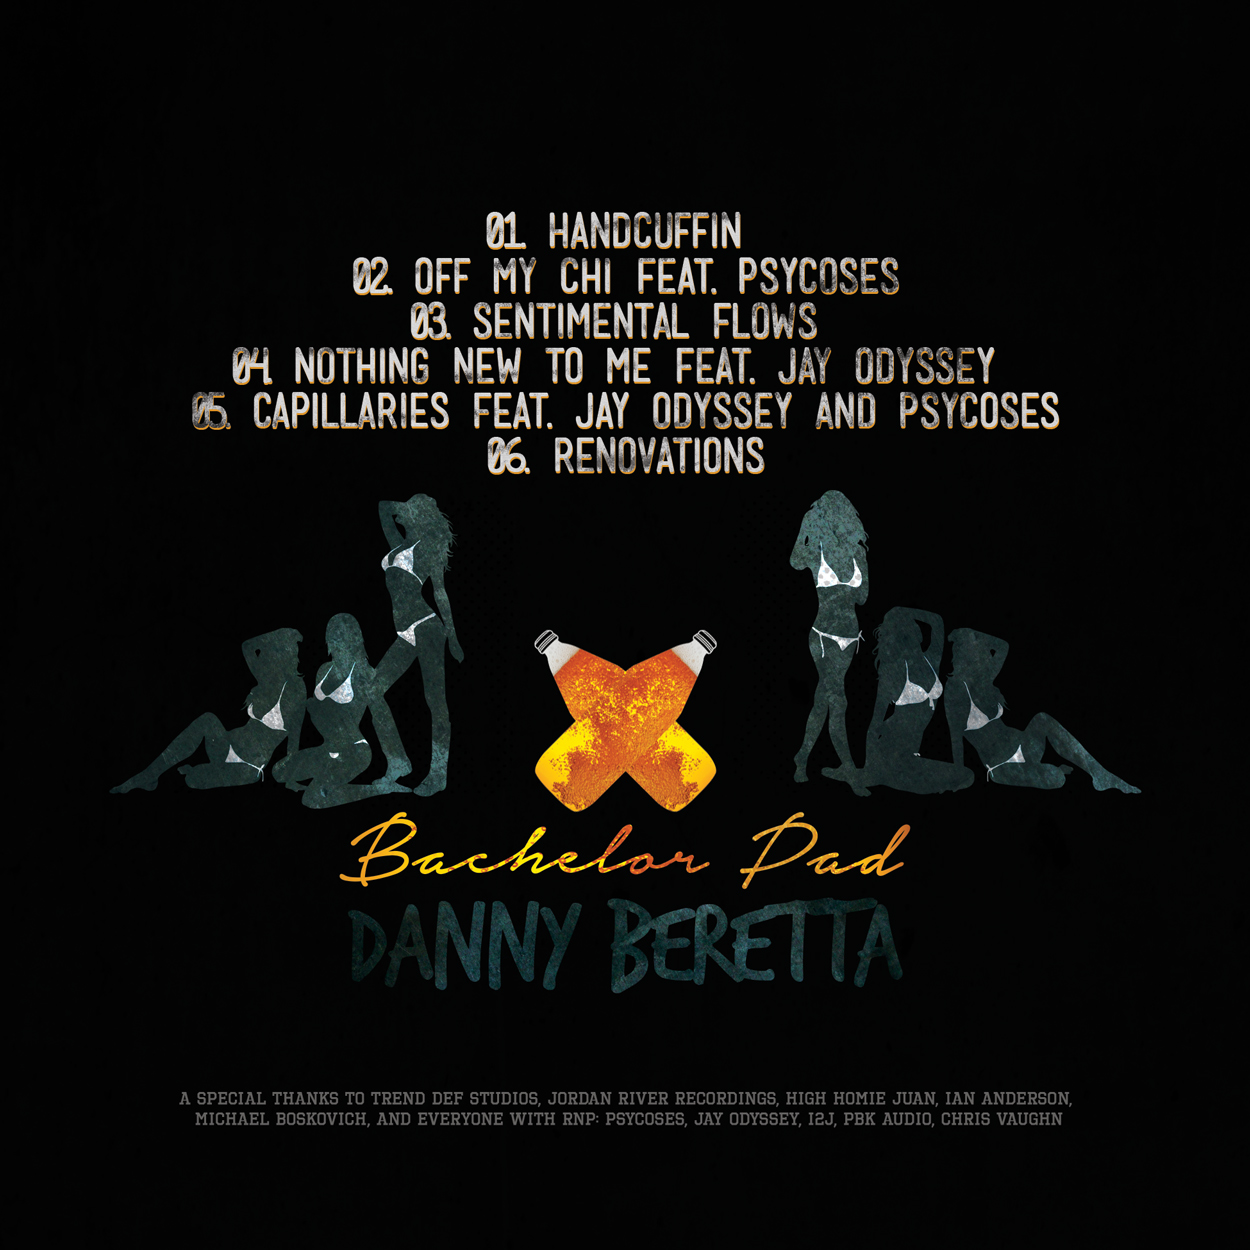 danny beretta - bachelor pad - album art design